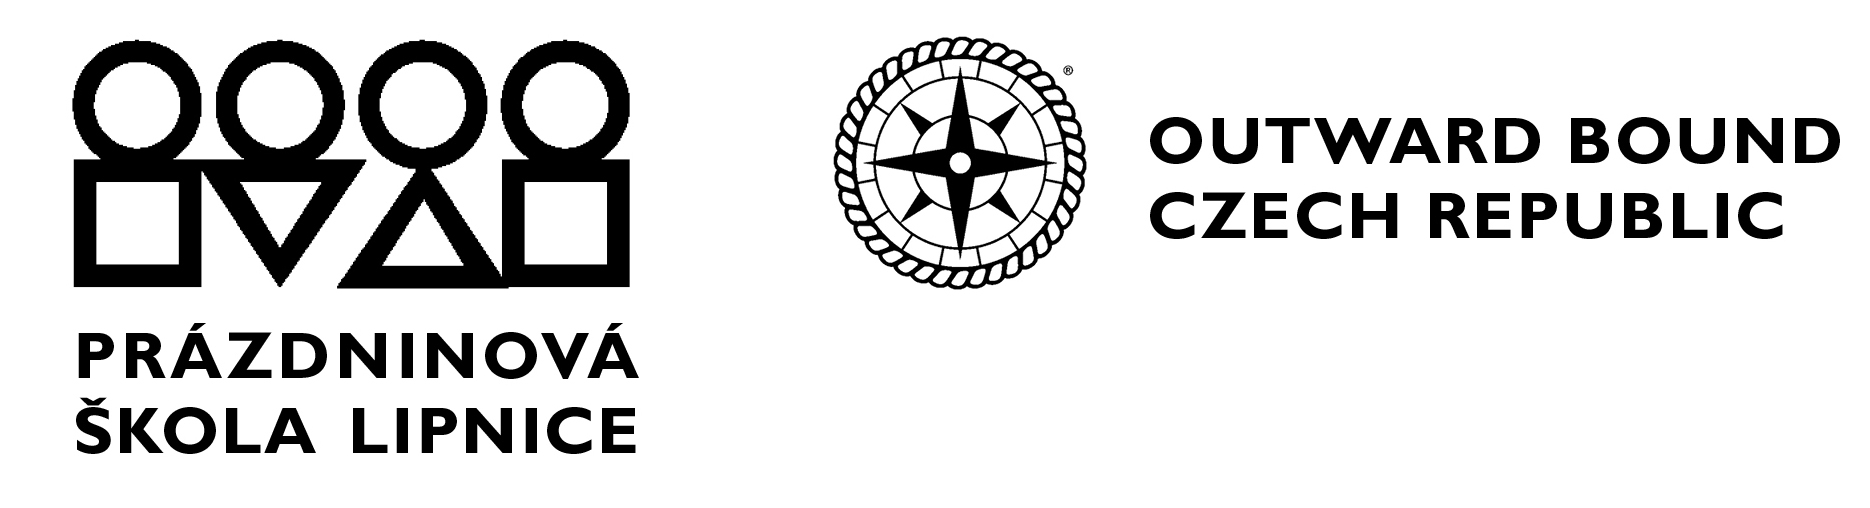 Outward Bound Czech Republic logo